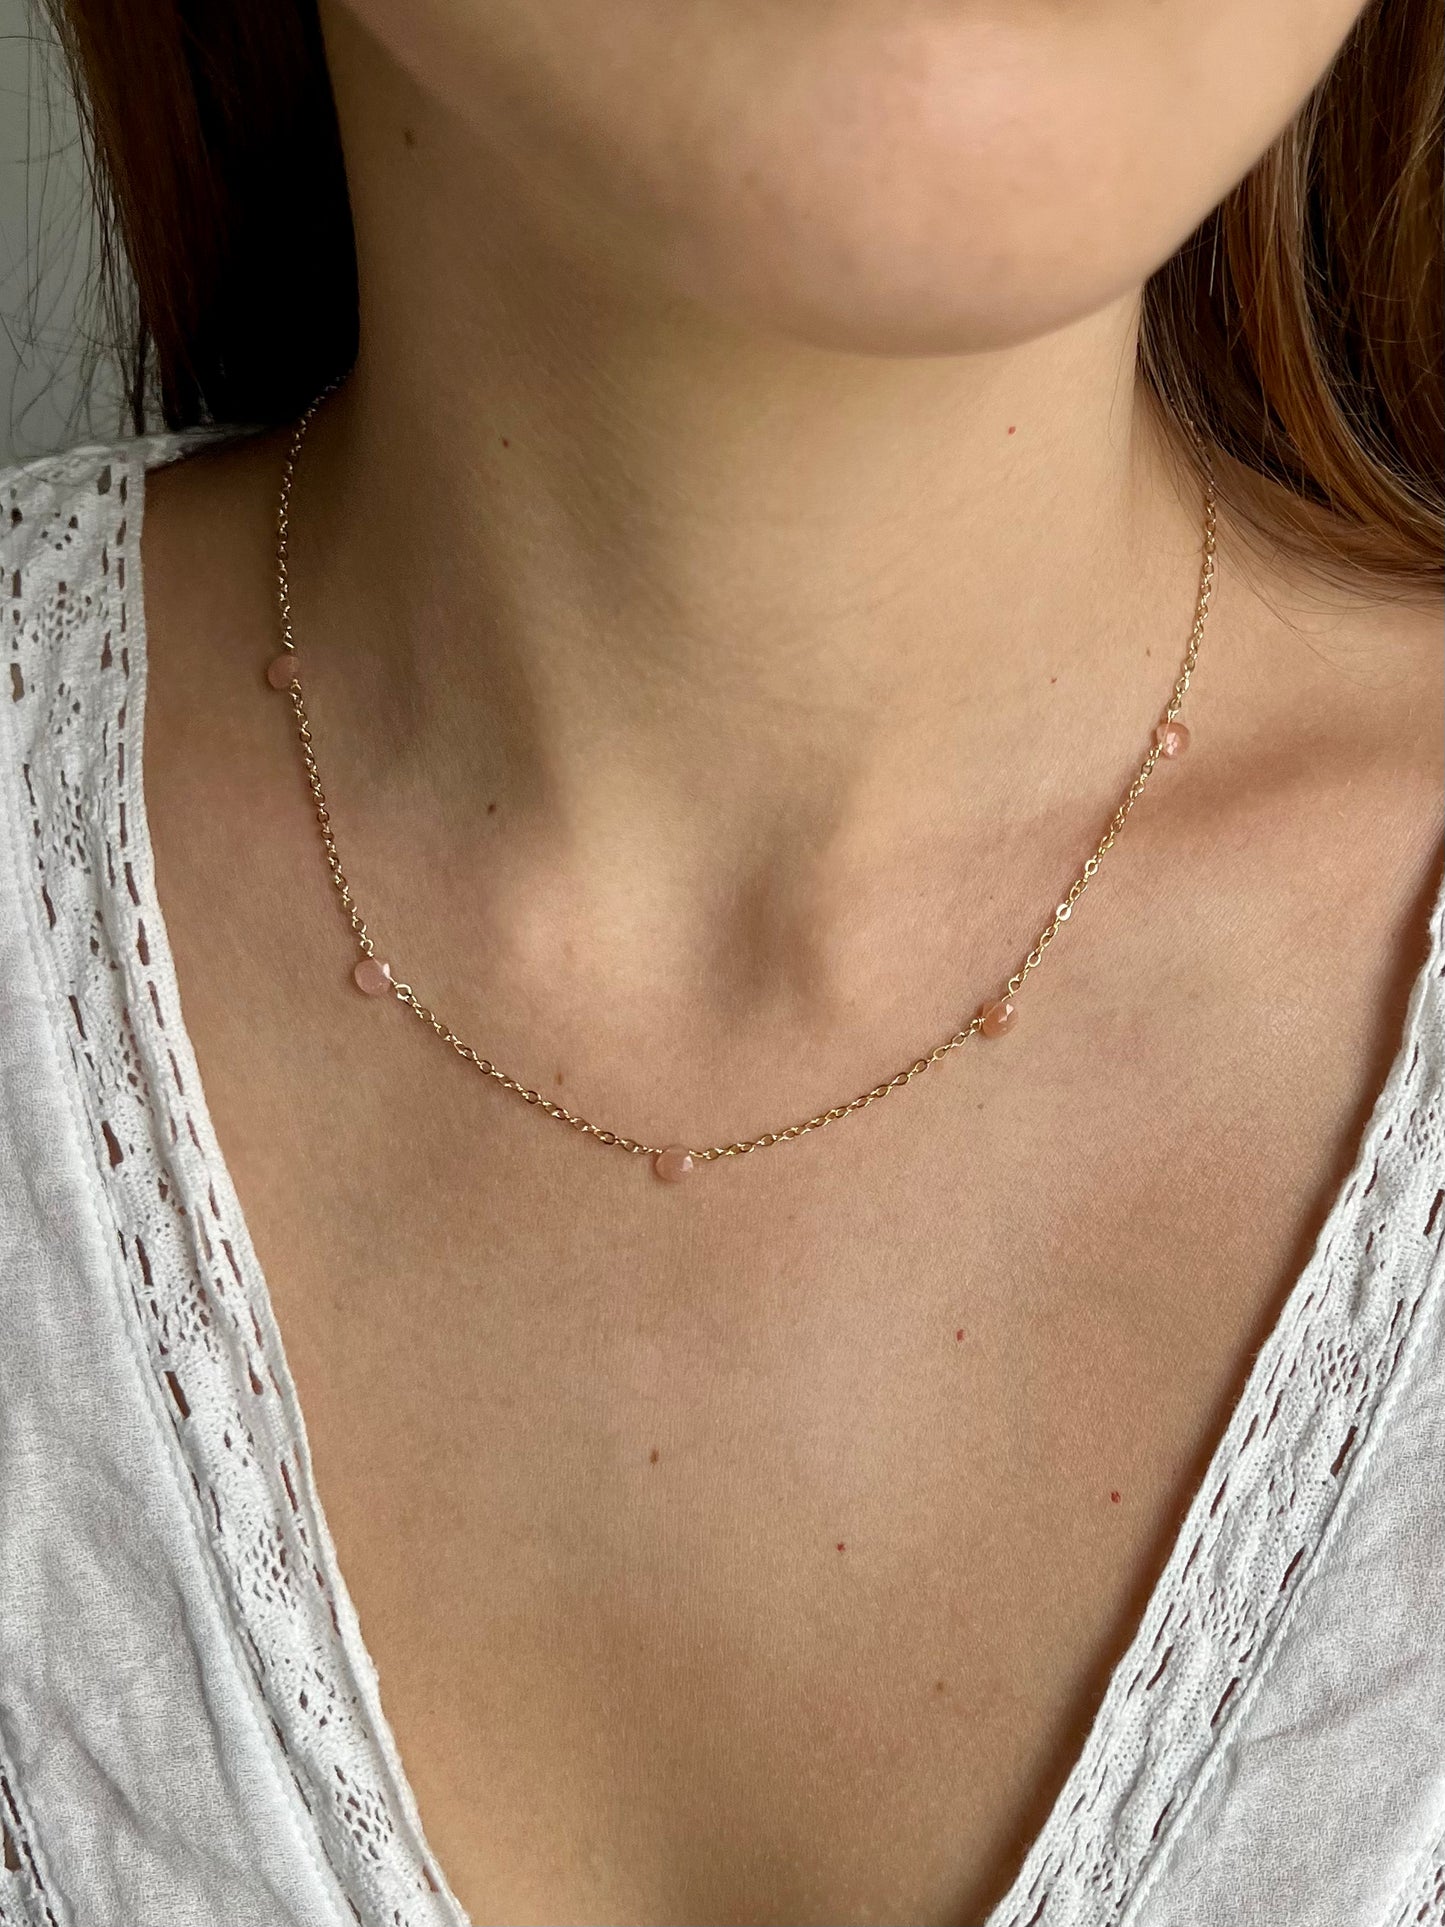 Peach Moonstone Necklace